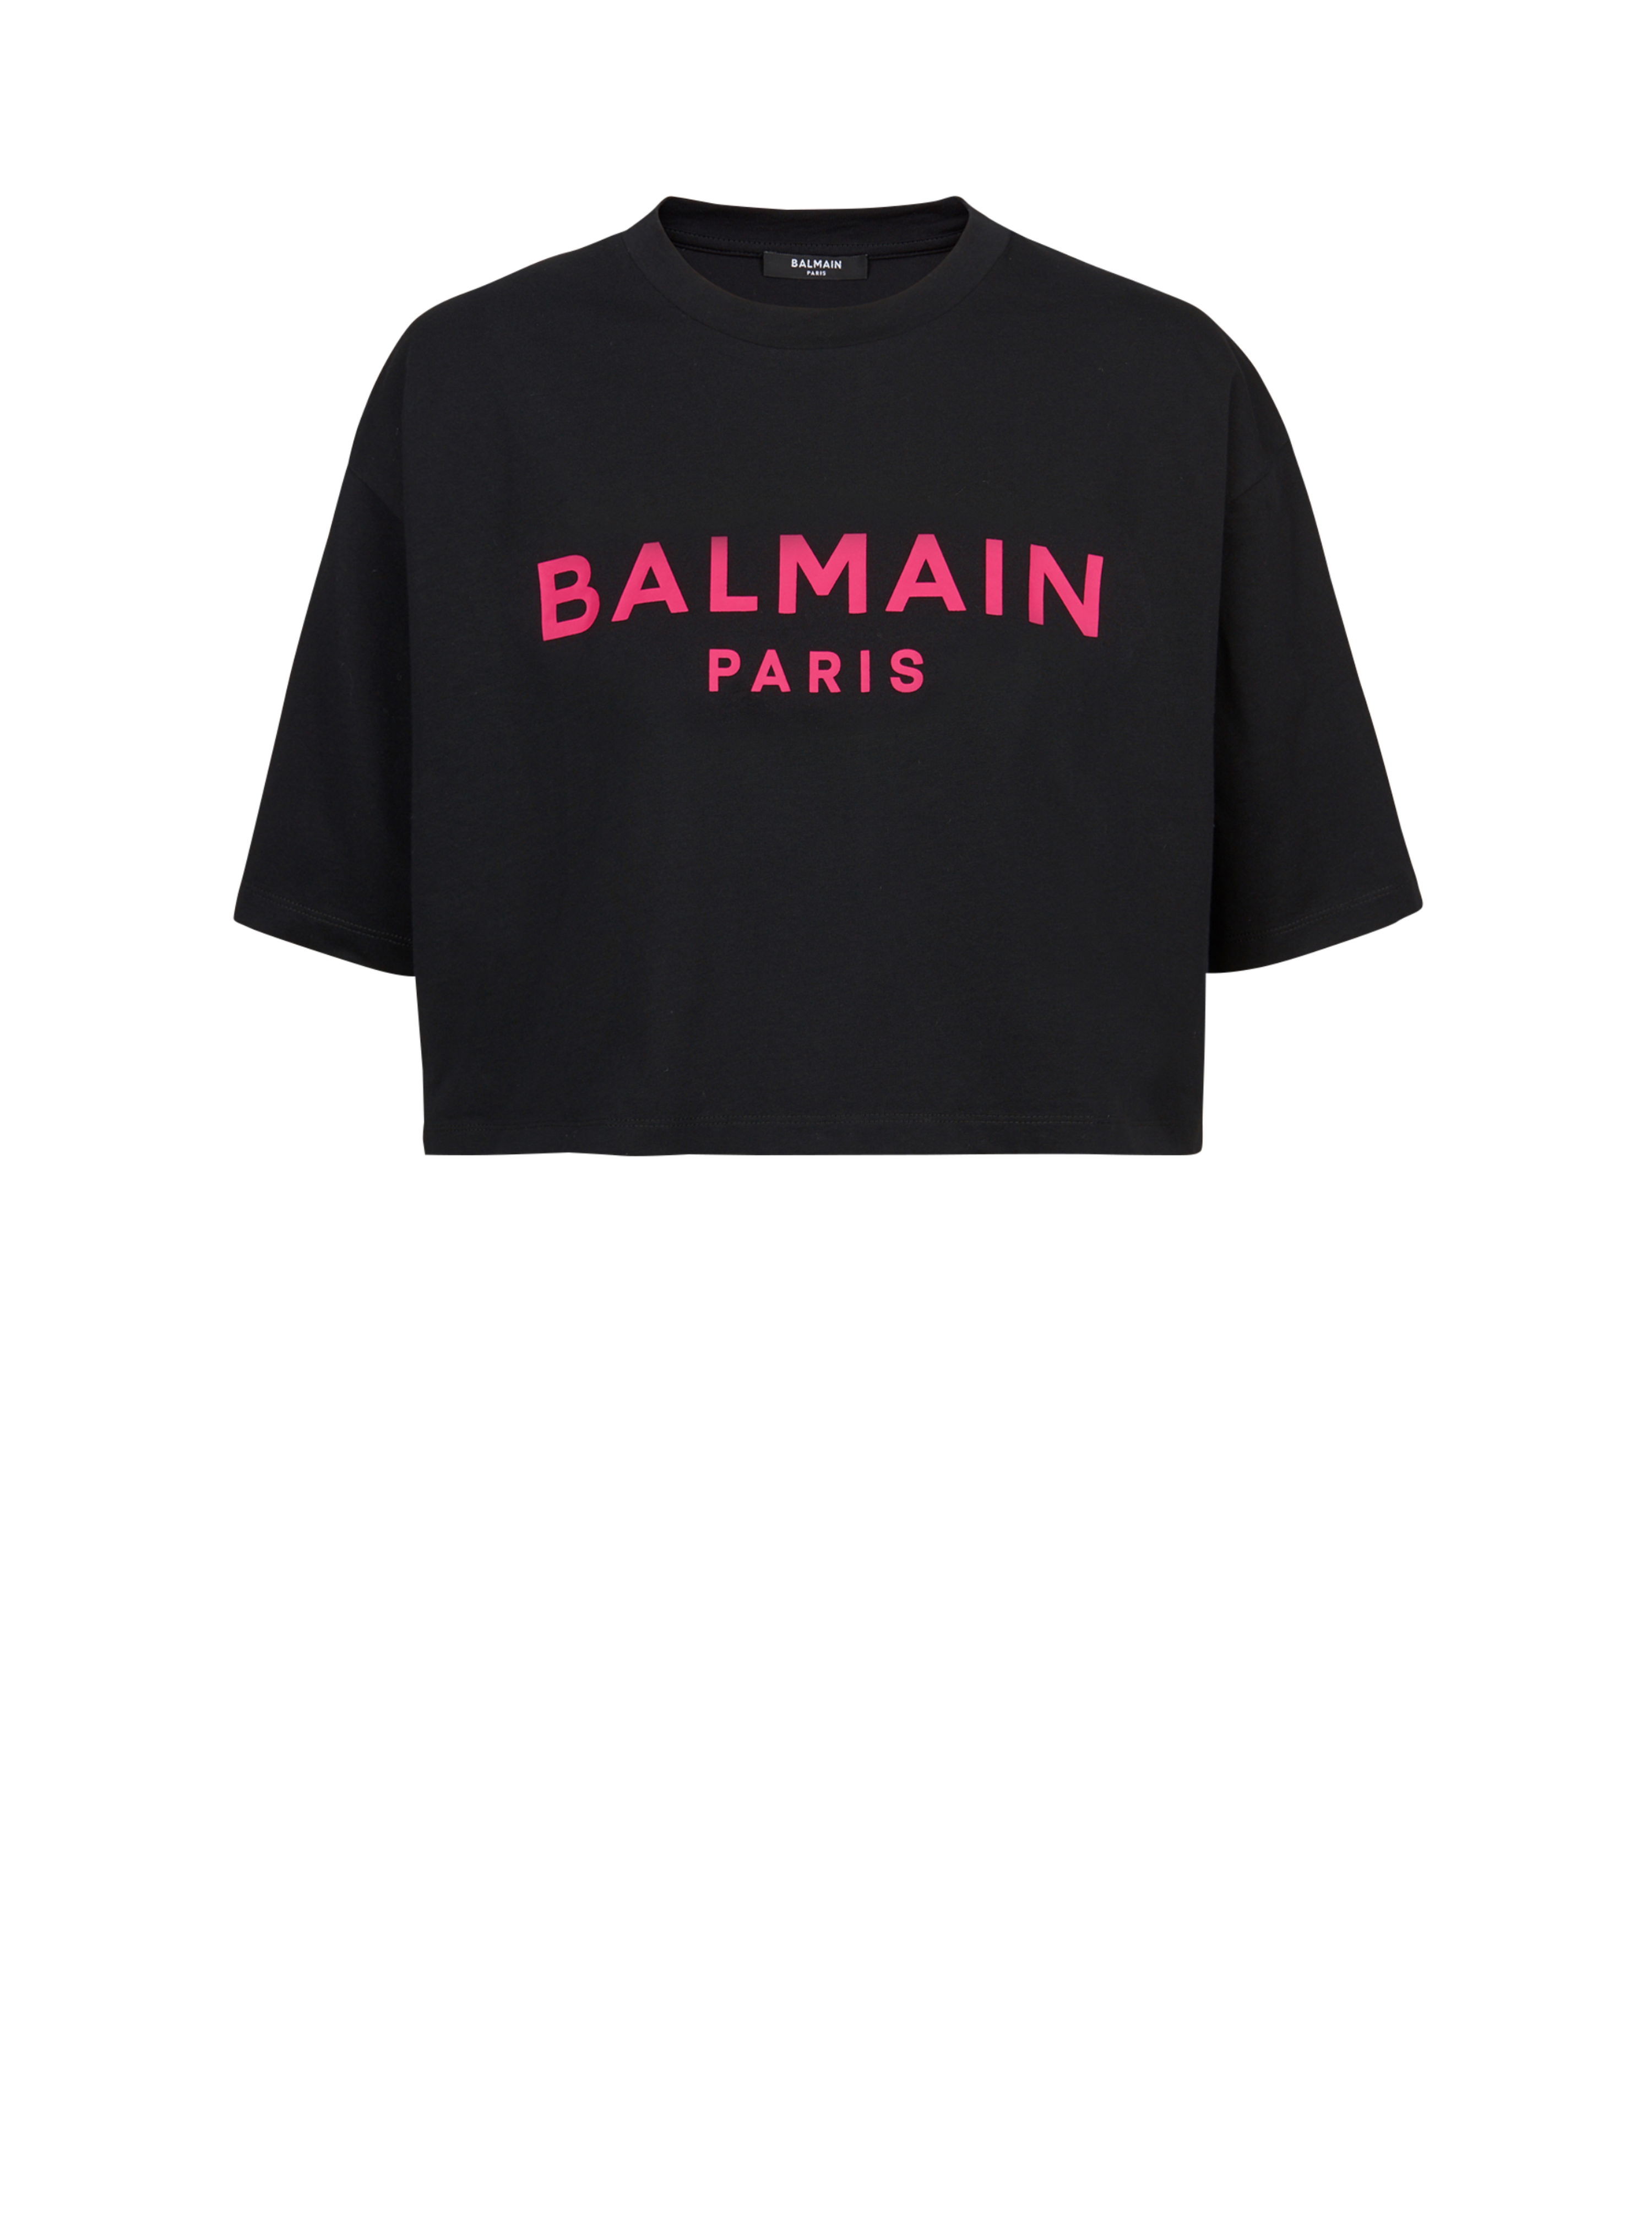 EXCLUSIF - T-shirt court en coton imprimé logo Balmain, rose